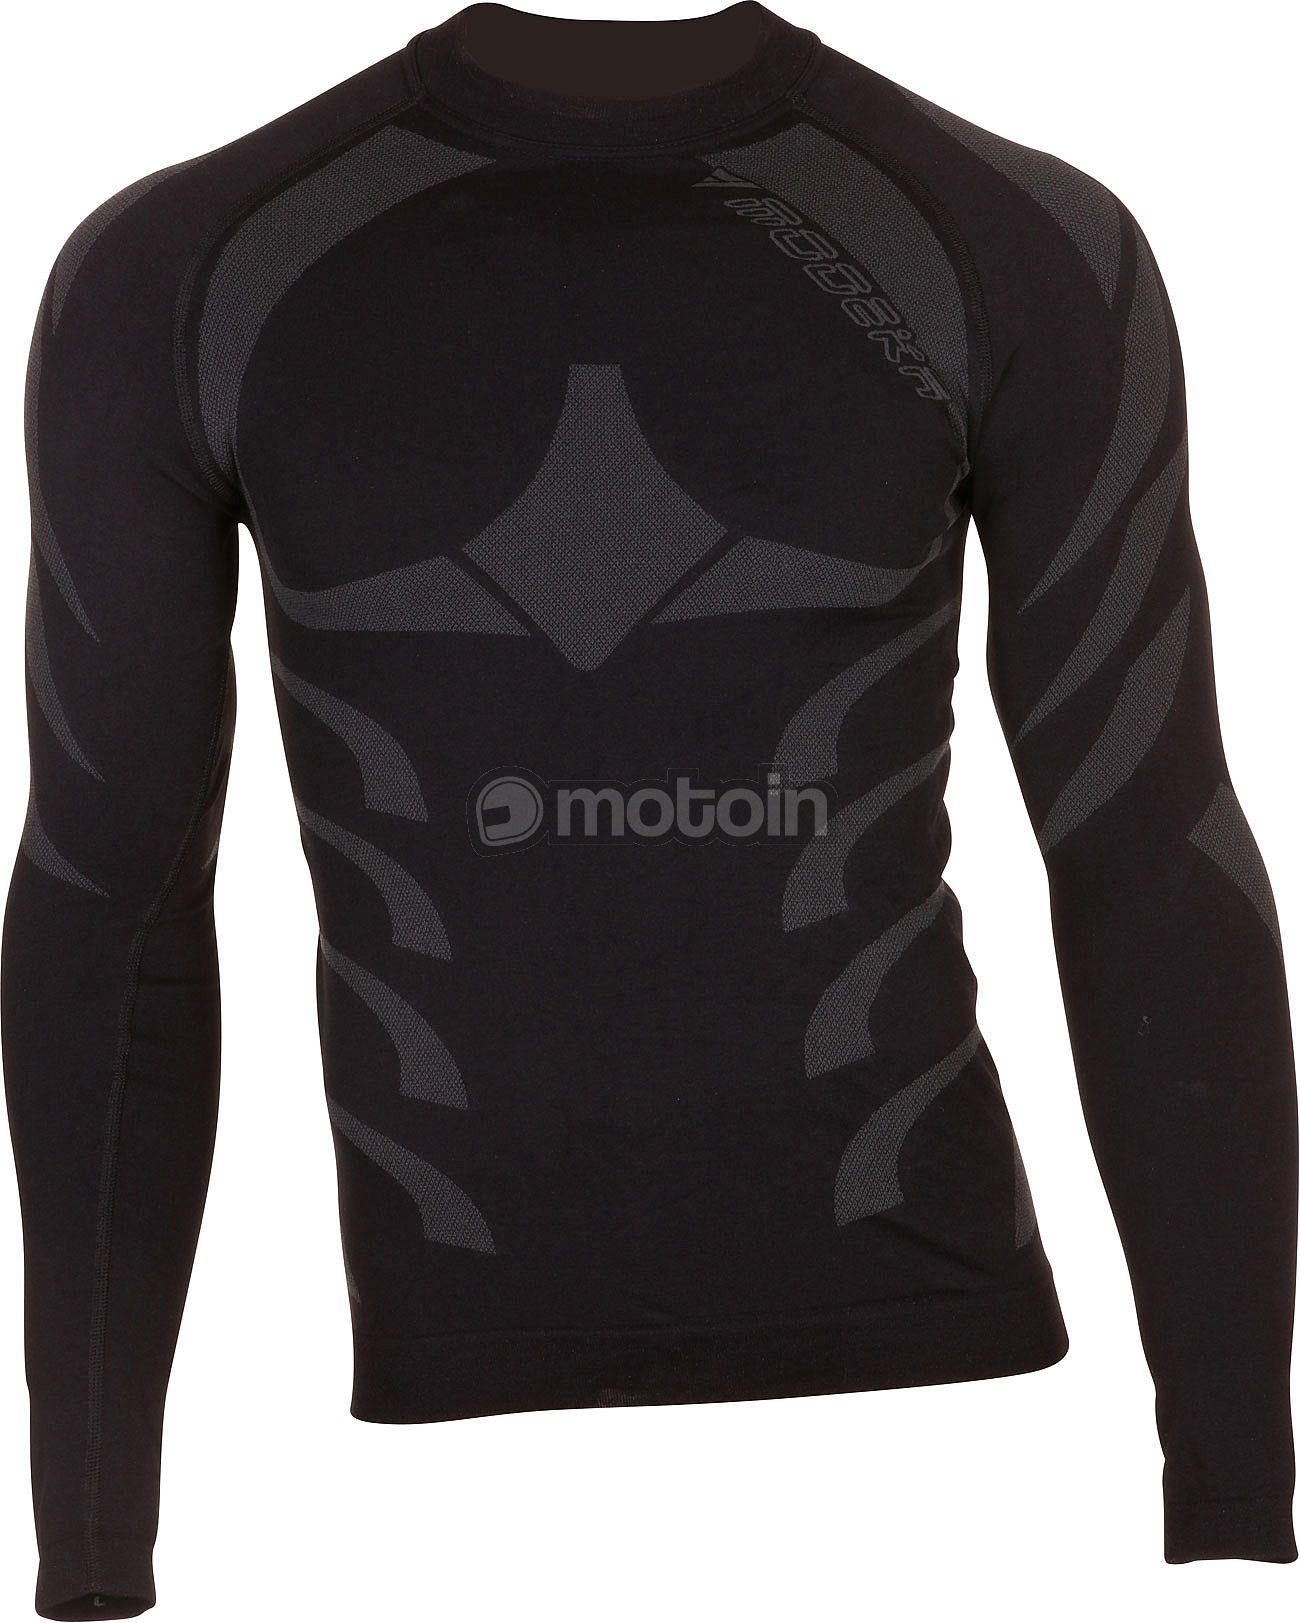 Modeka Tech-Dry, funktionel skjorte